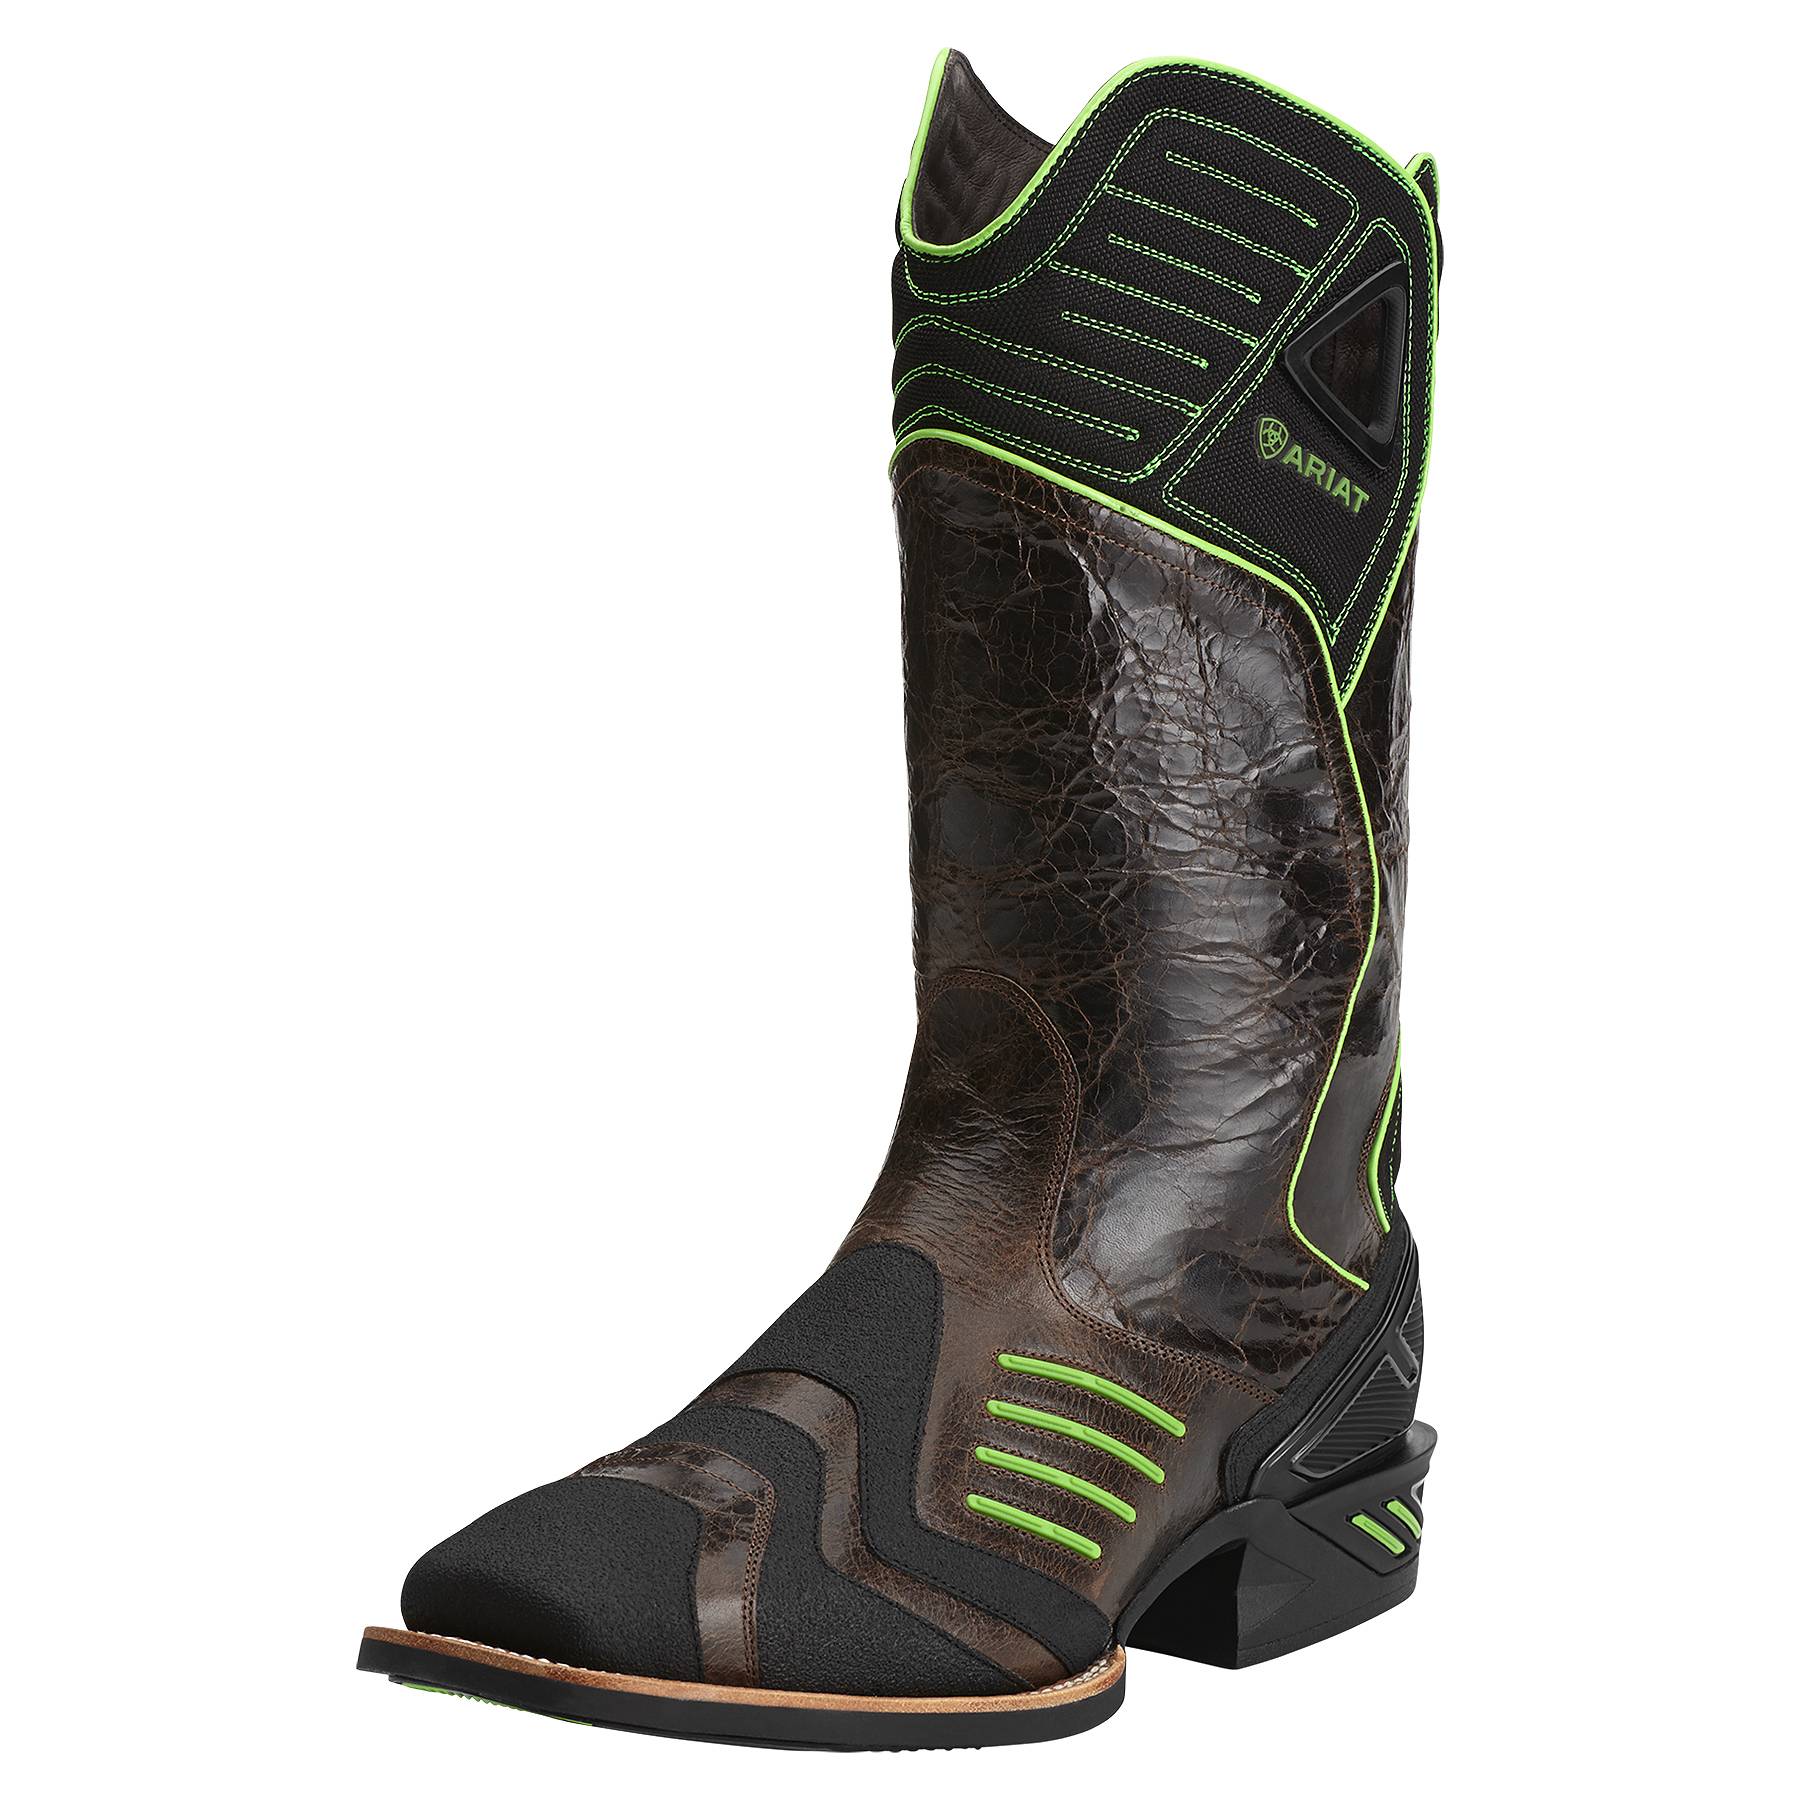 ariat men's catalyst vx western boots